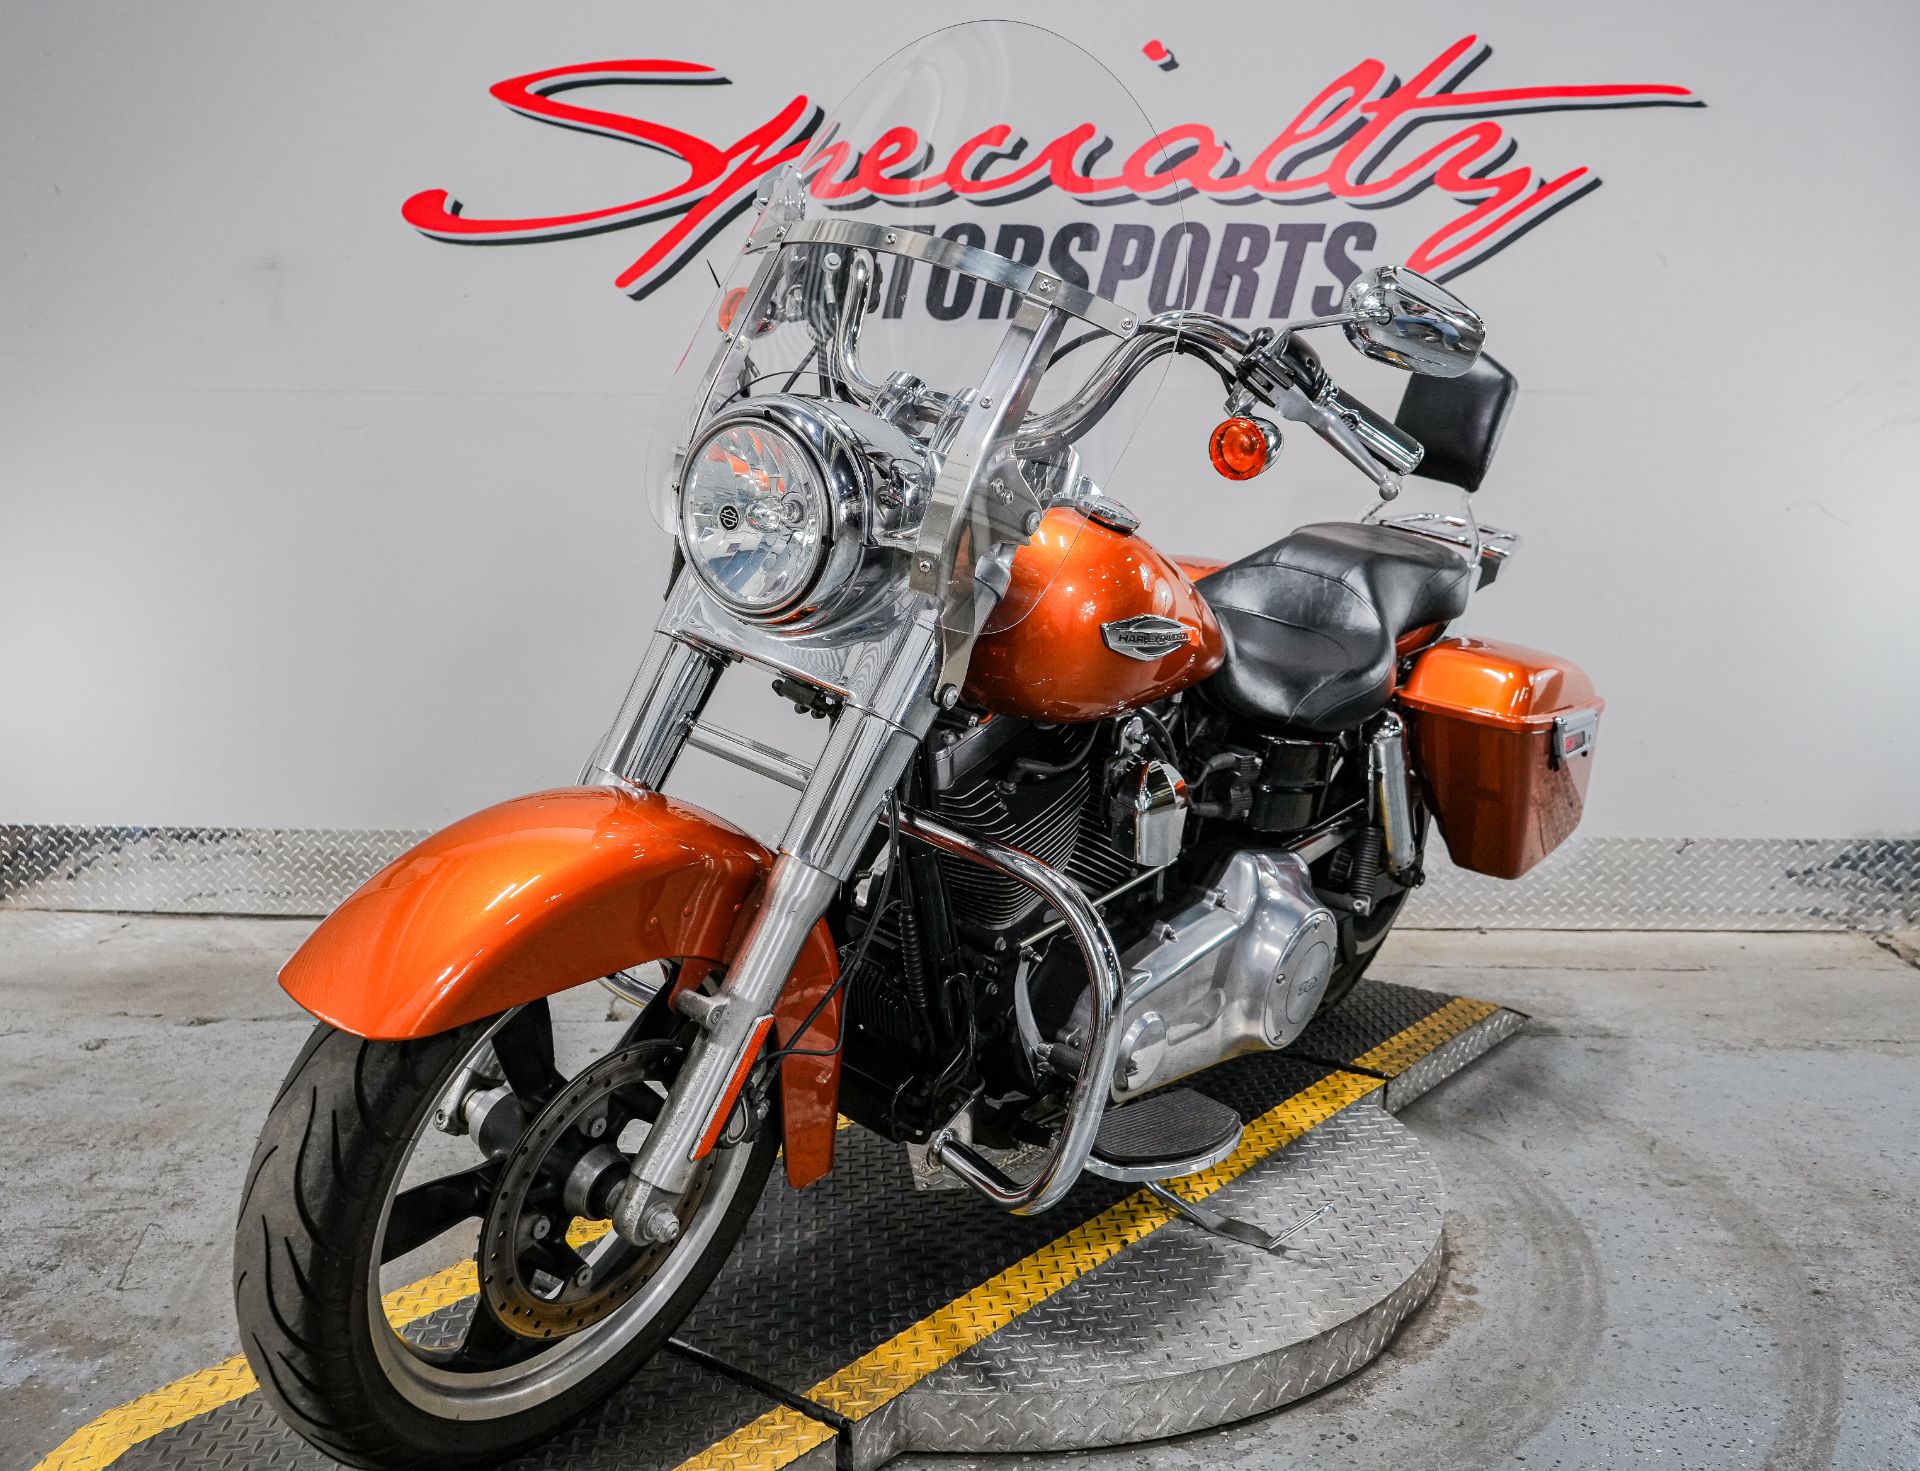 2014 Harley-Davidson Dyna® Switchback™ in Sacramento, California - Photo 6